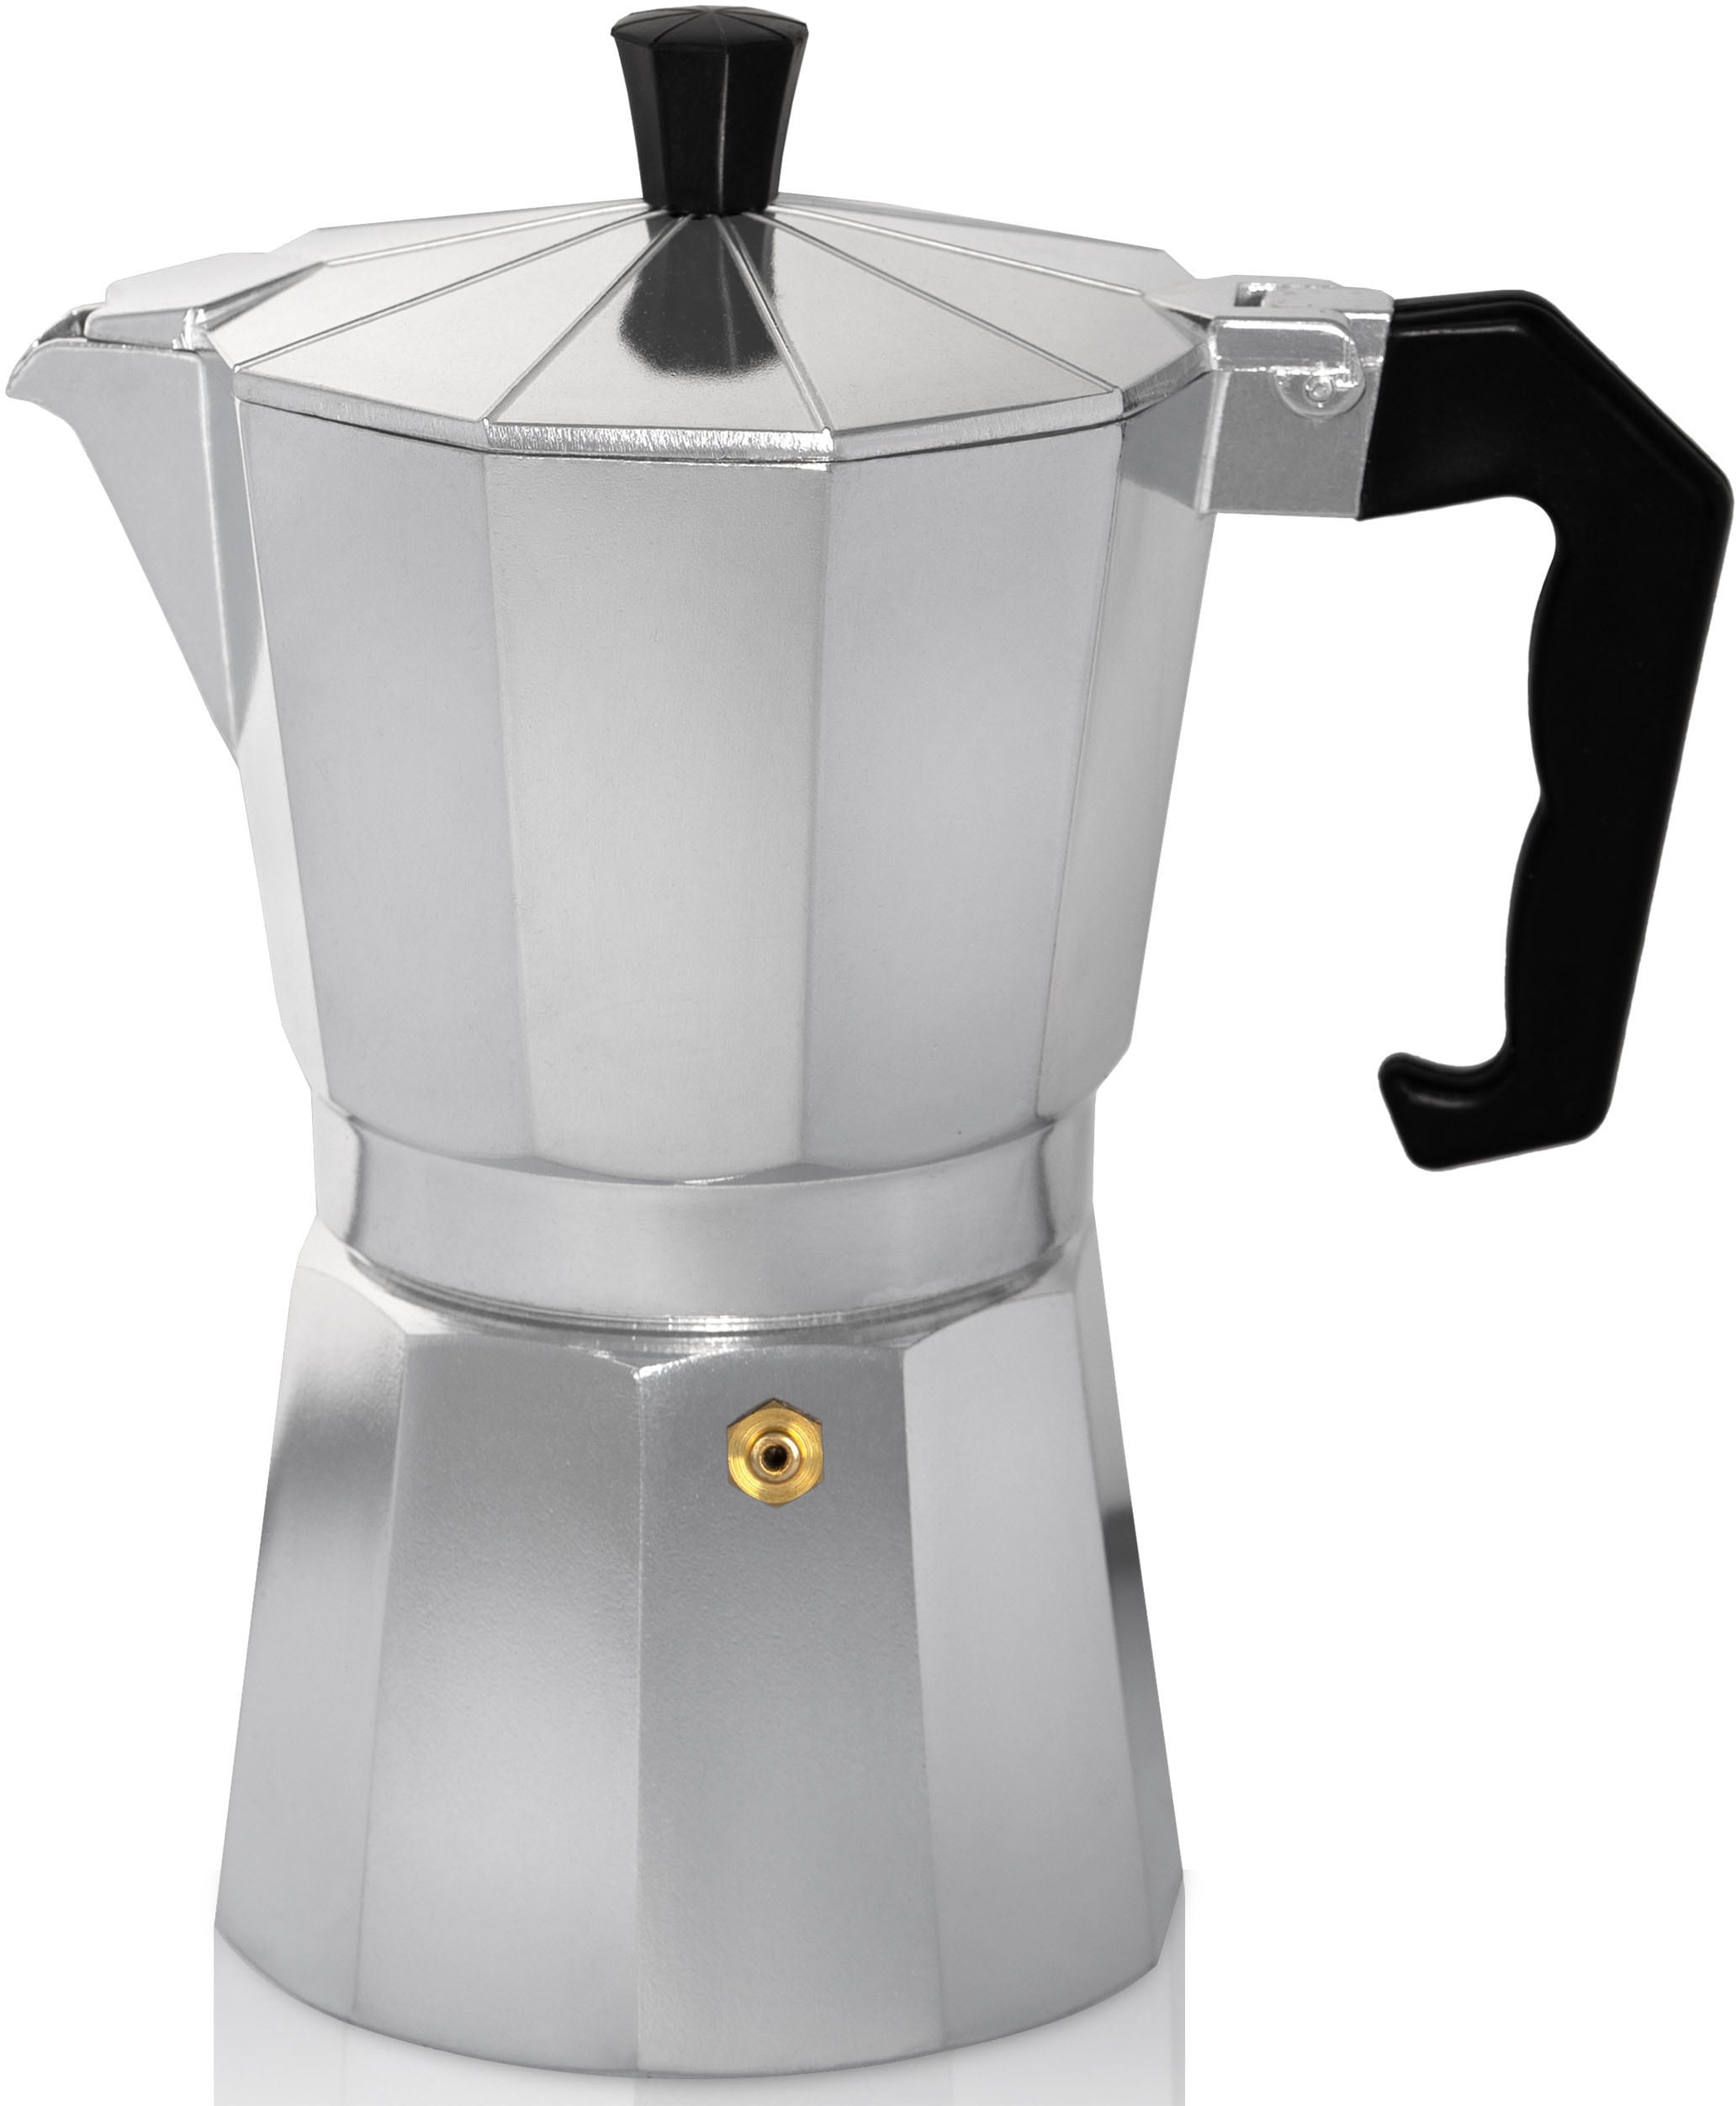 Krüger Espressokocher »Italiano«, 0,45 l Kaffeekanne, traditionell italienisch, aus Aluminium, mit Silikon-Dichtungsring